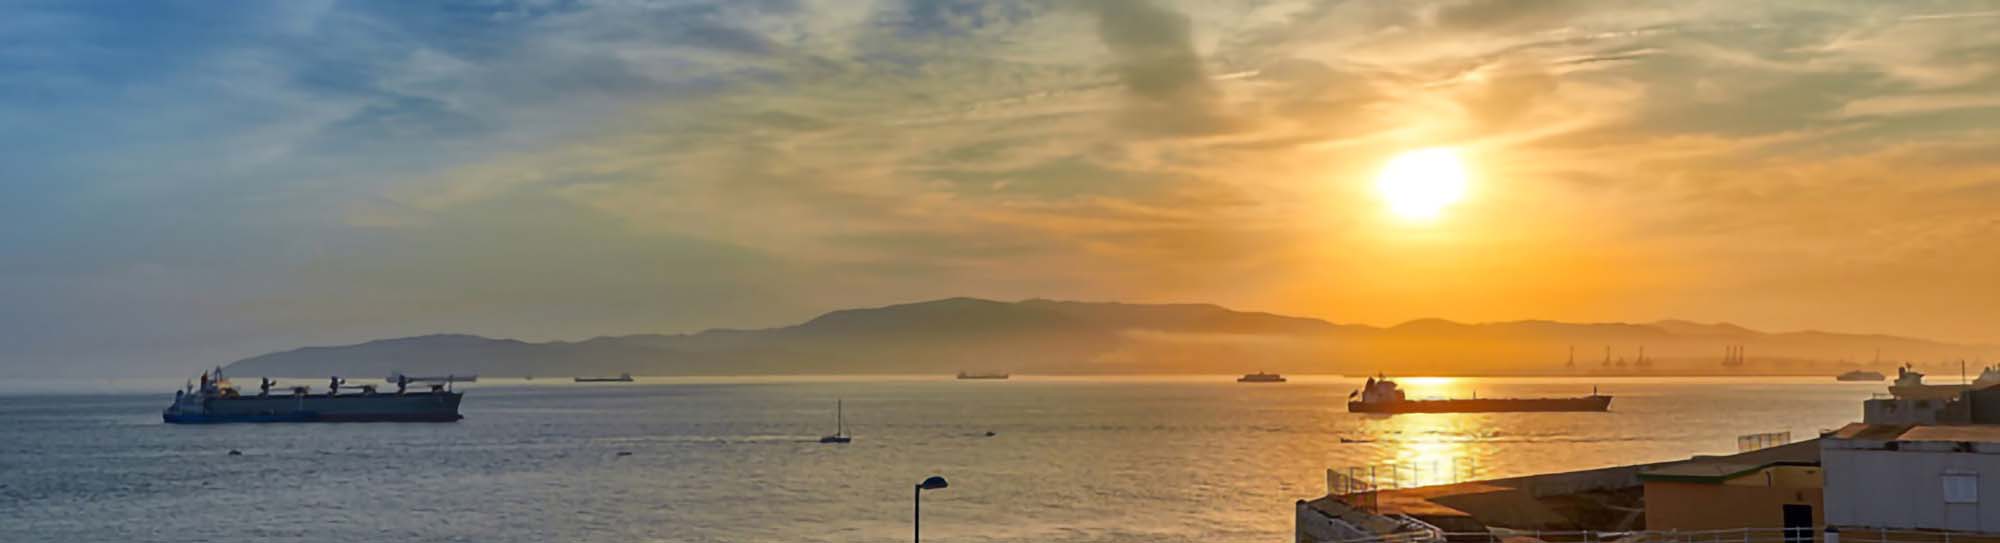 Imagen recurso del puerto de destino Algeciras para la ruta en ferry Tánger Med - Algeciras